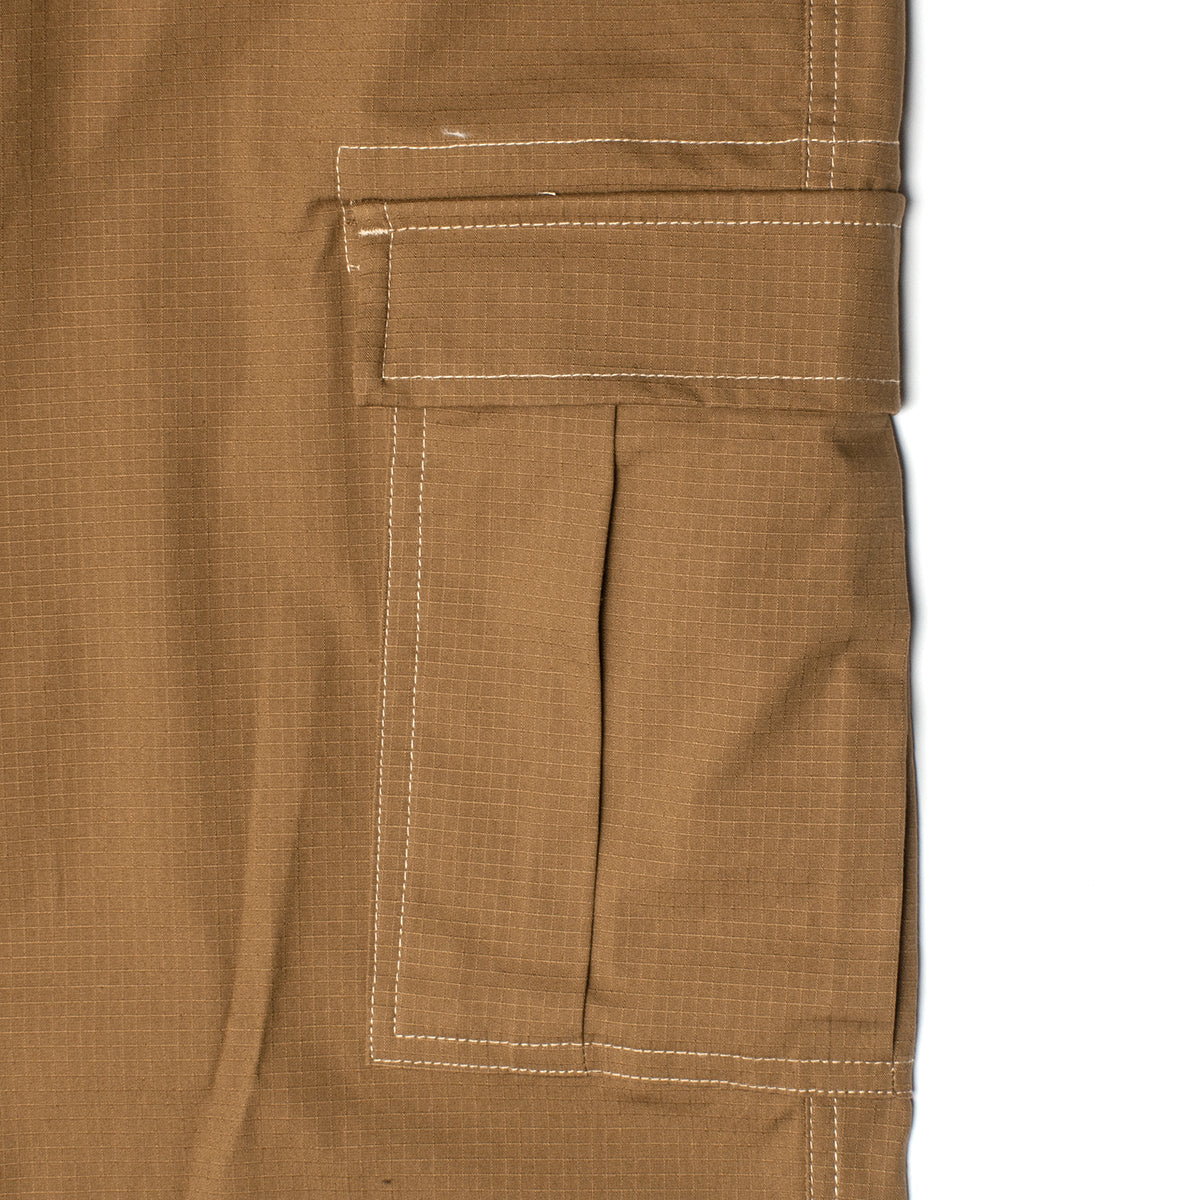 Nike SB | Kearny Cargo Pant Style # FD0401-270 Color : Ale Brown